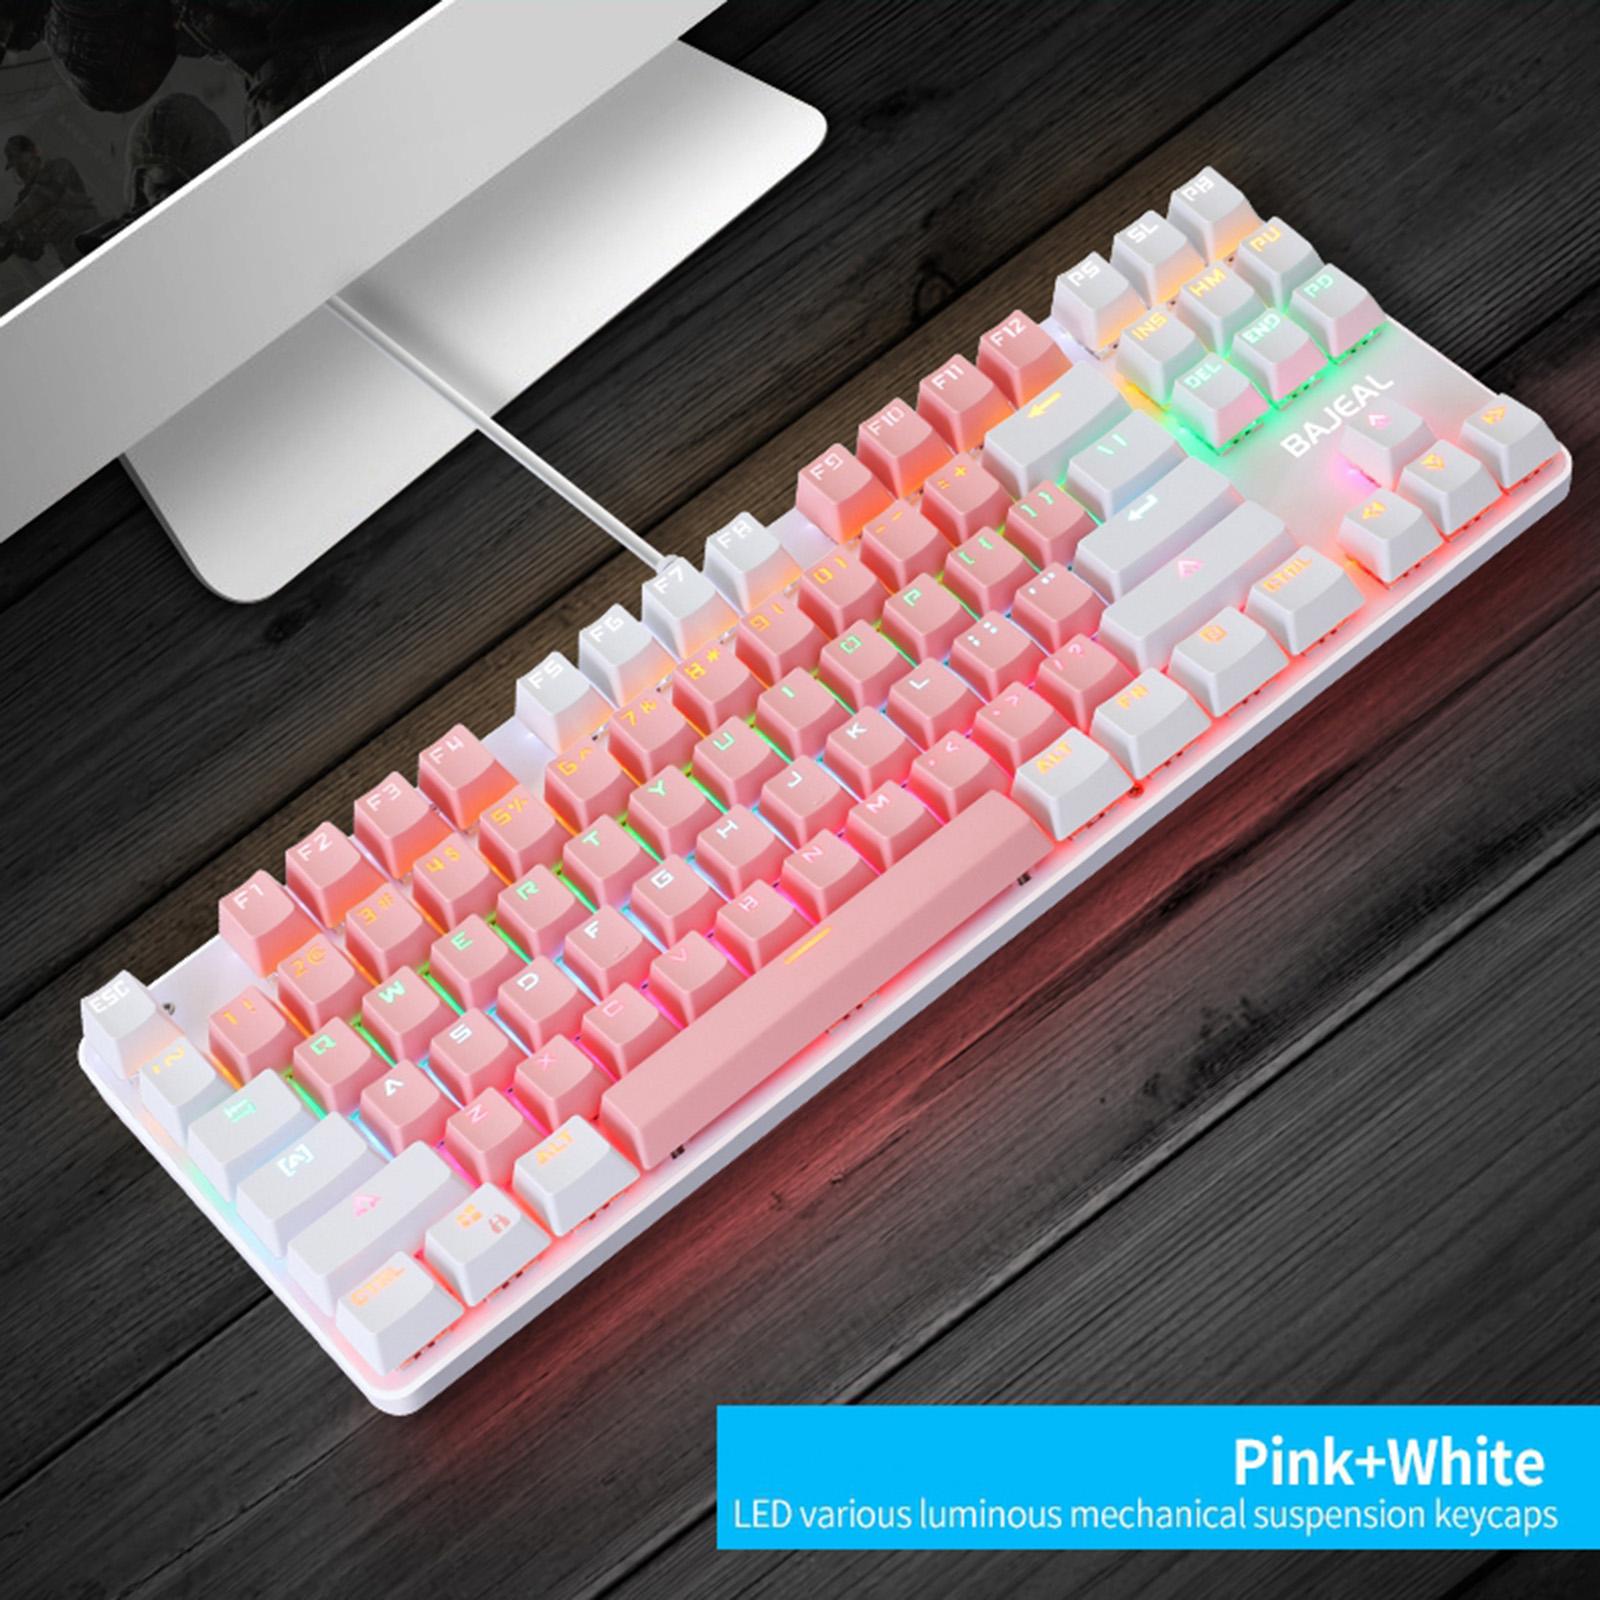 Computer Desktop Wired Gaming Keyboard 87 Keys Layout for +Pink